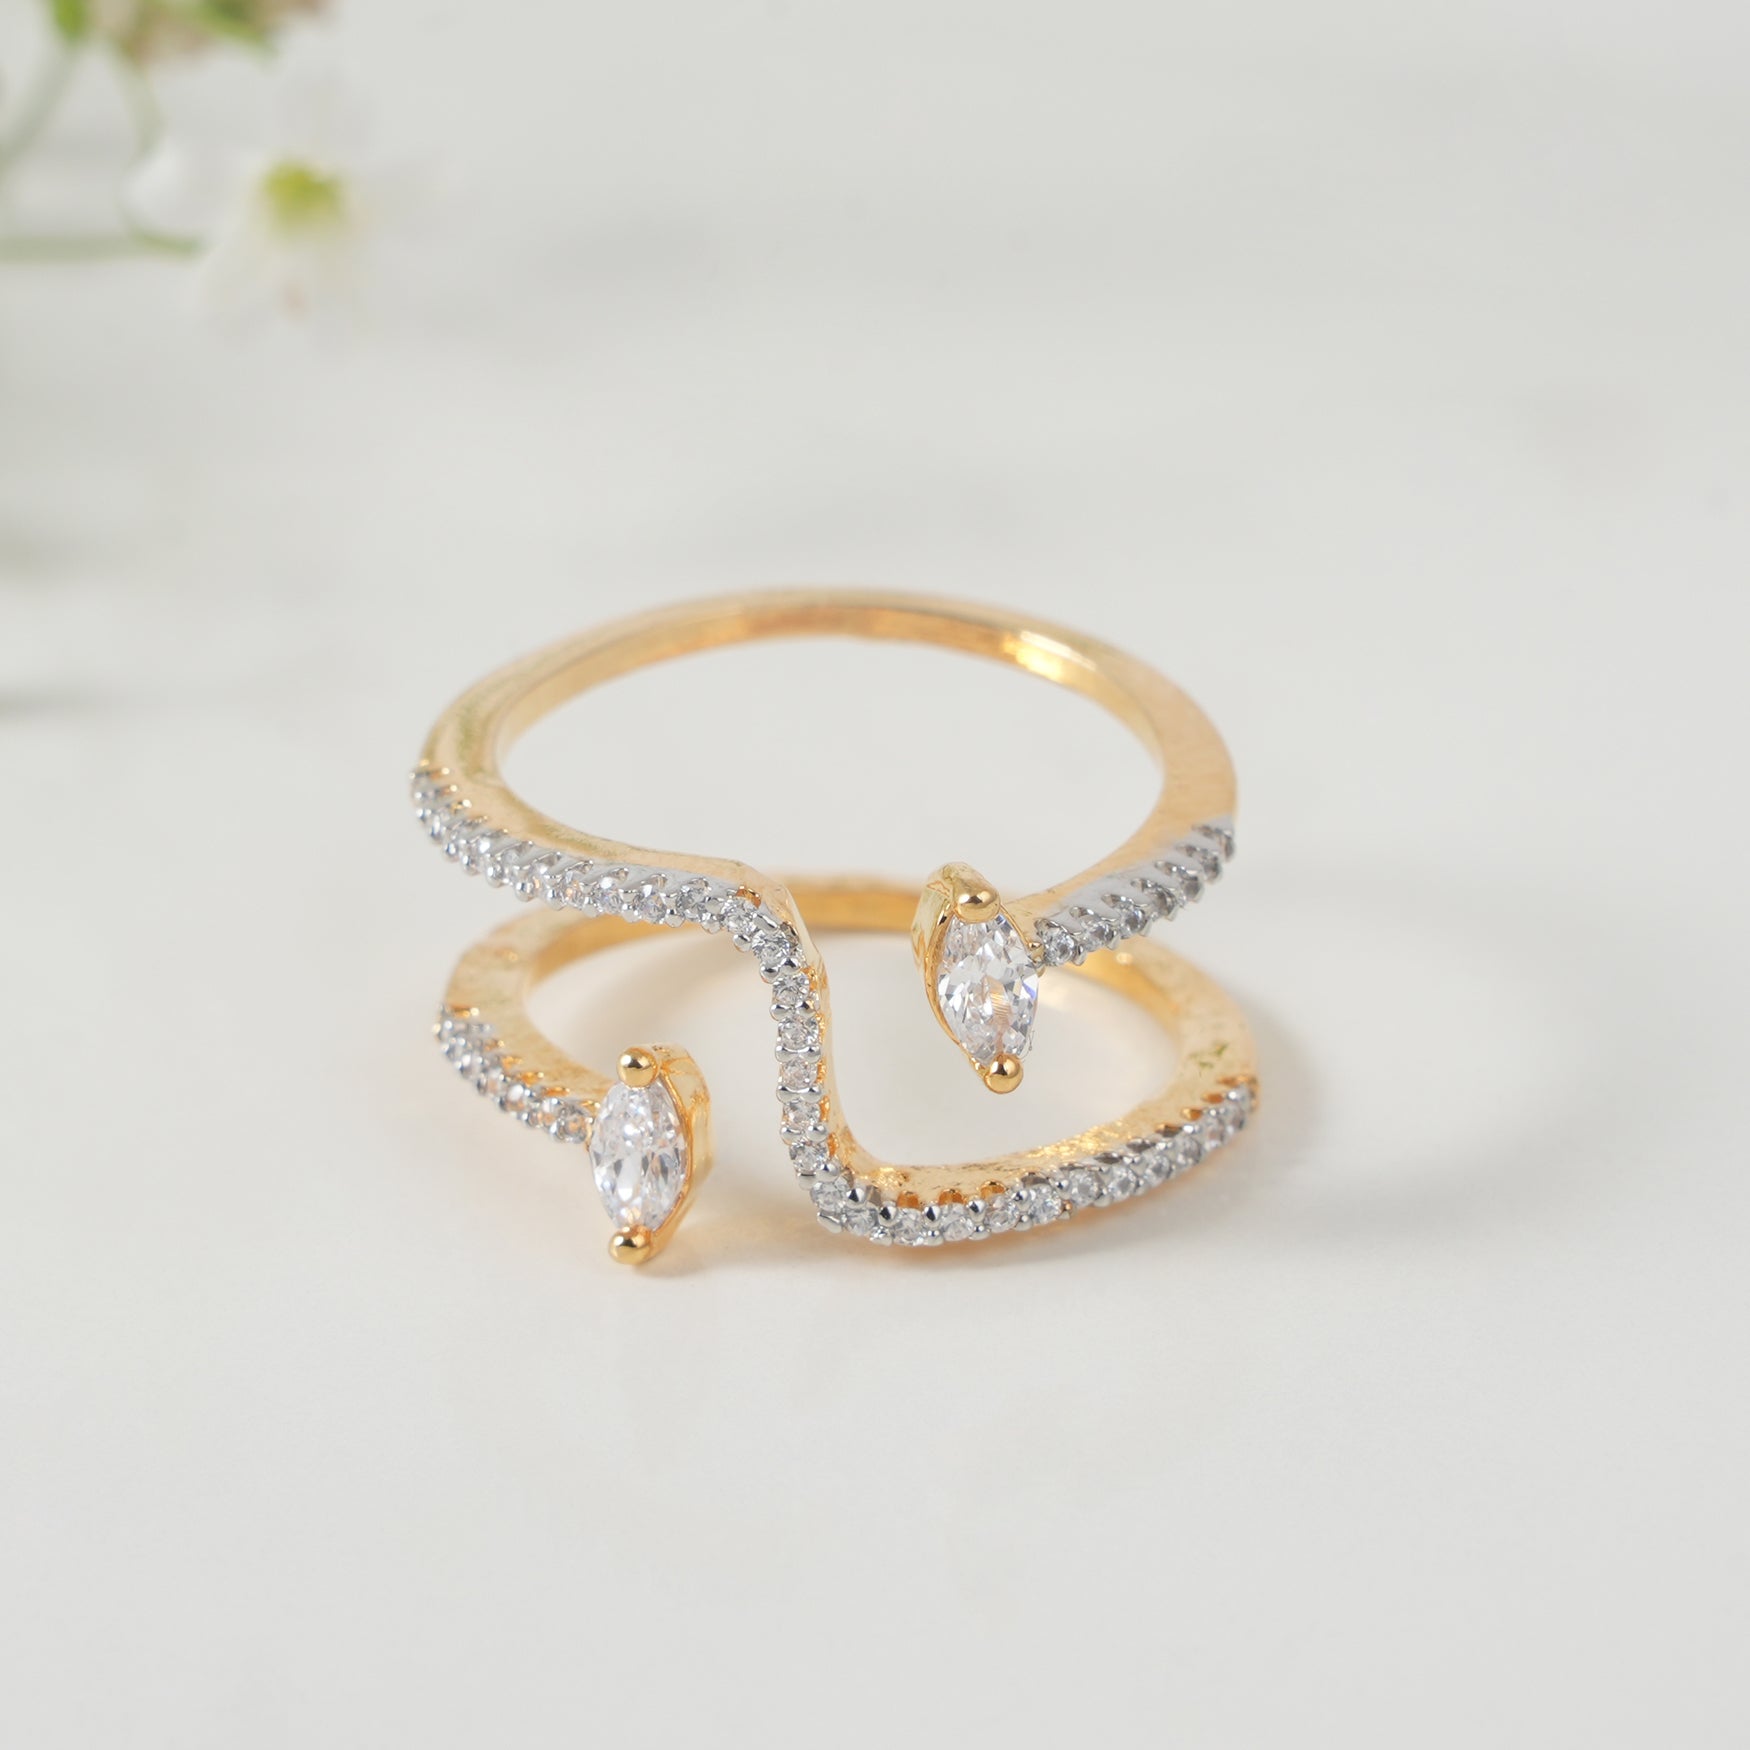 Delicate chic diamond ring